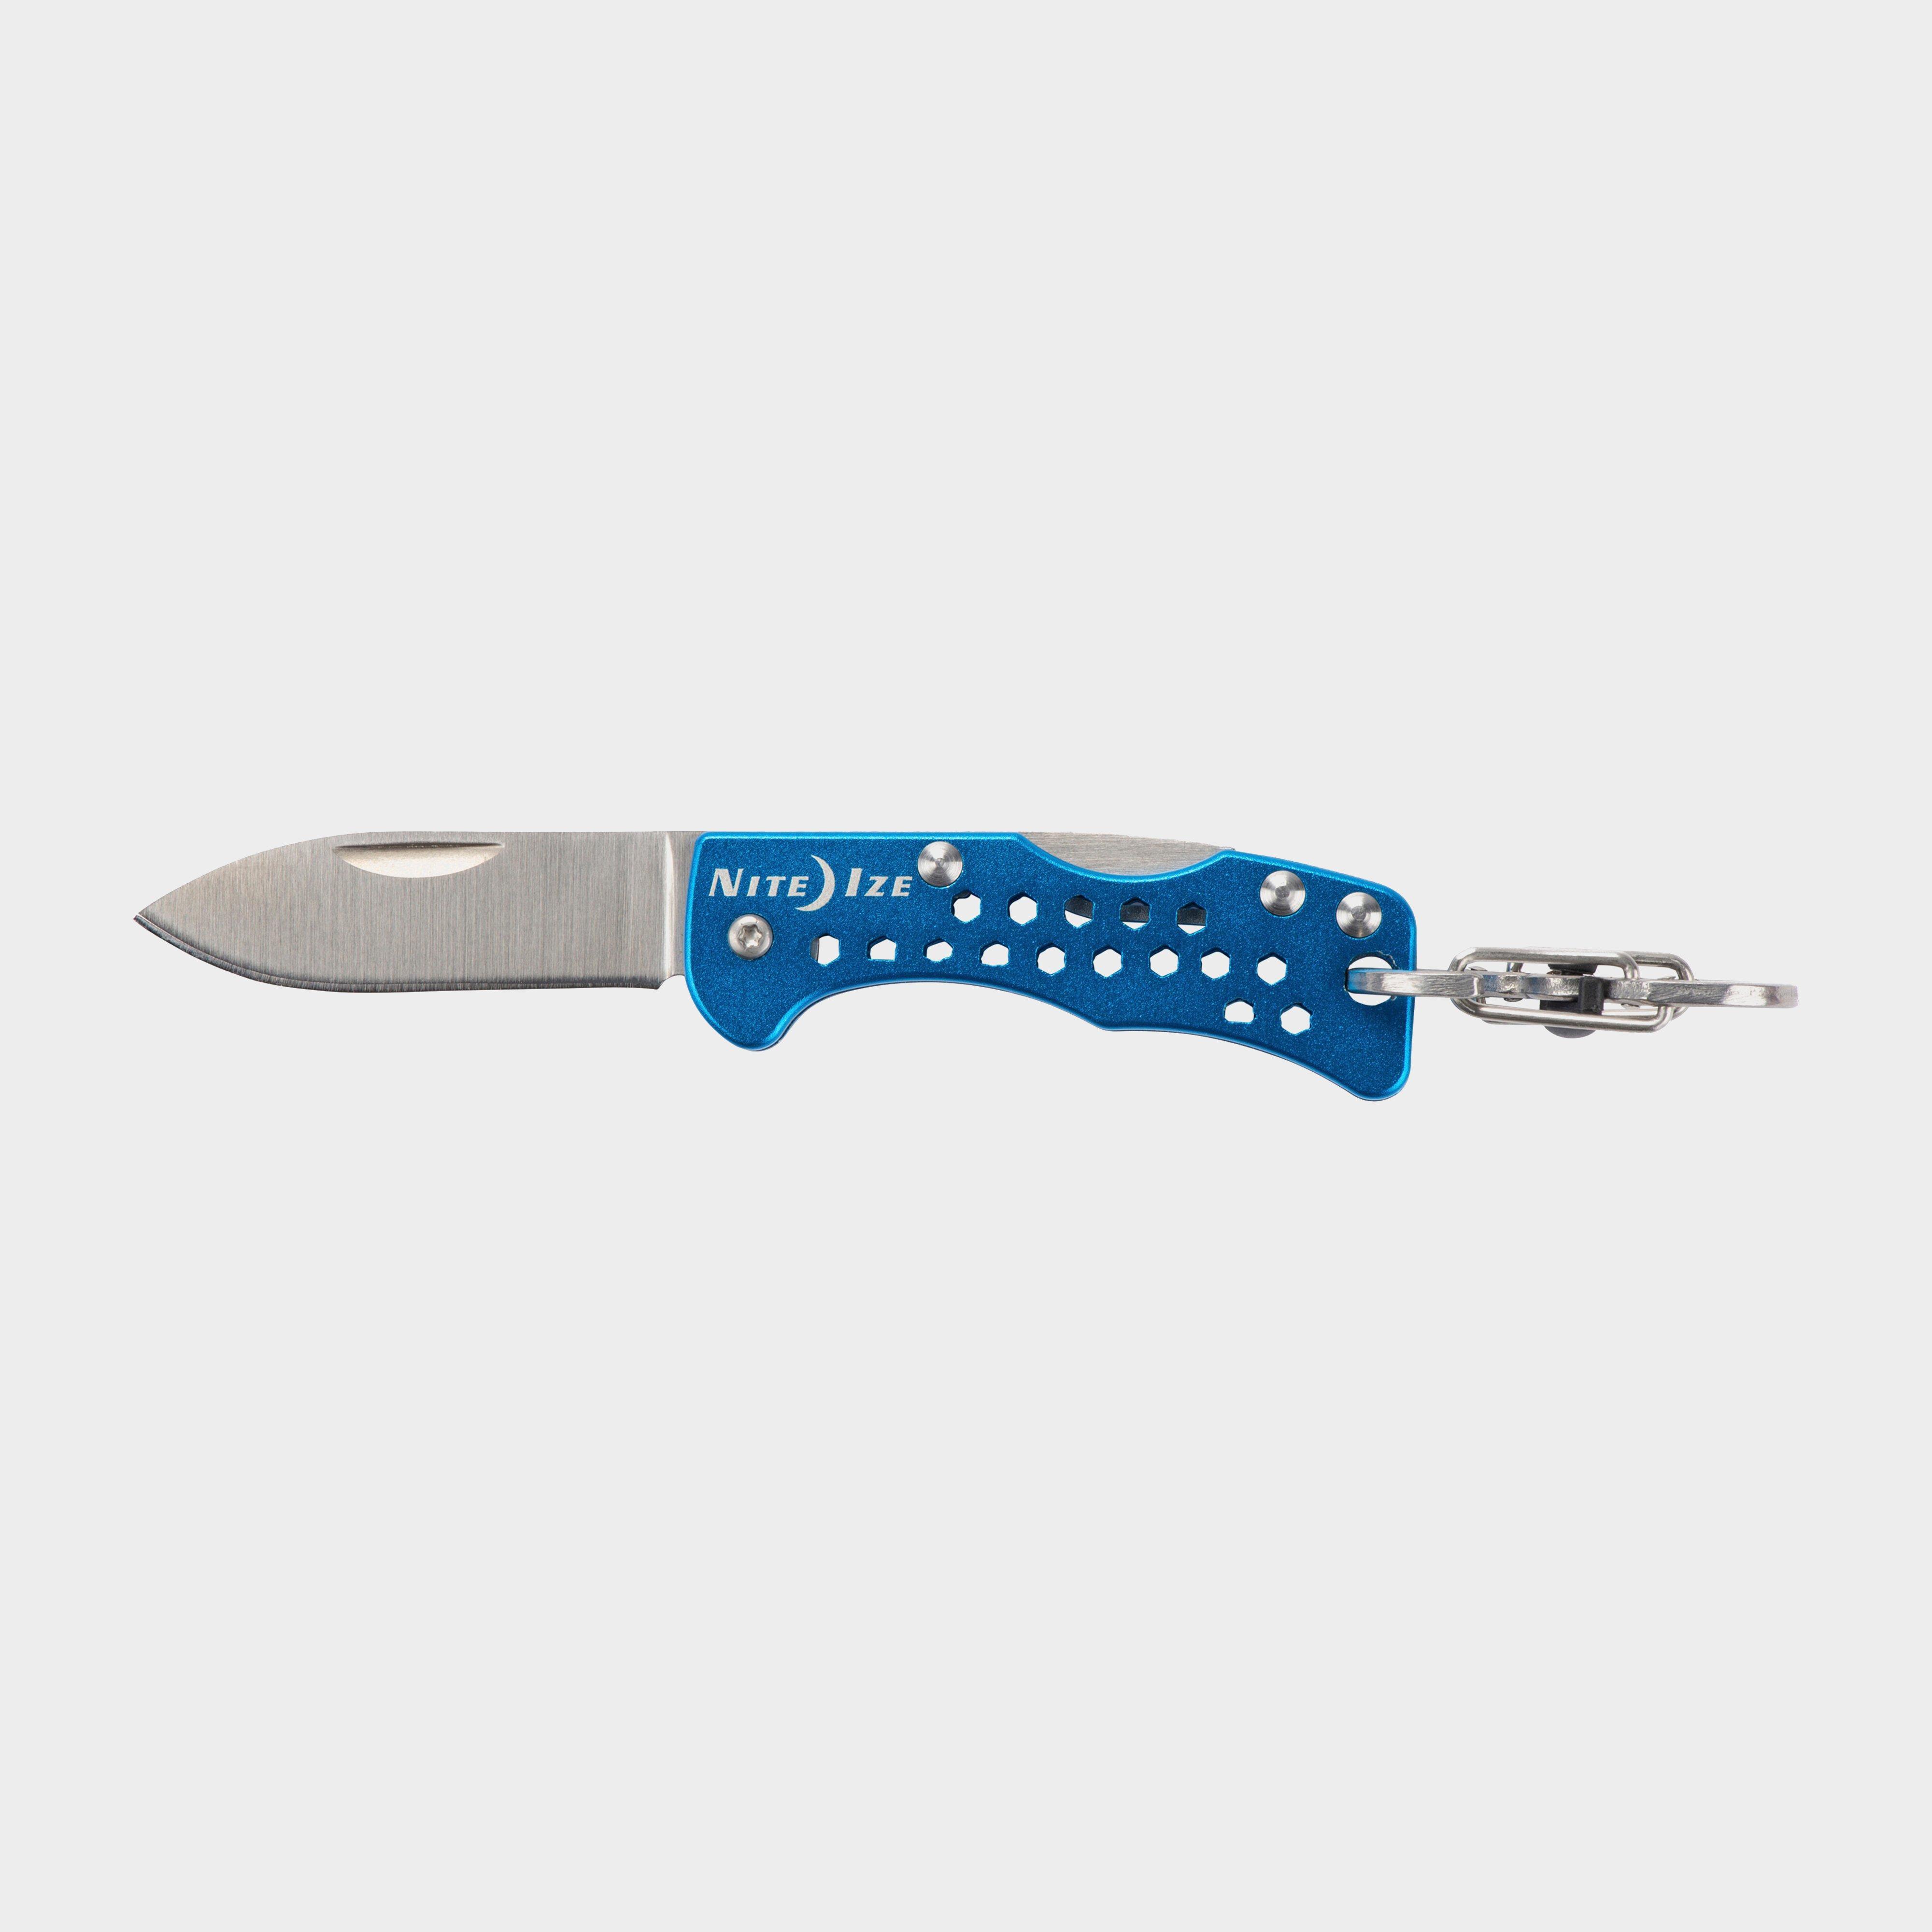 Niteize Doohickey Key Chain Knife - Blue, Blue